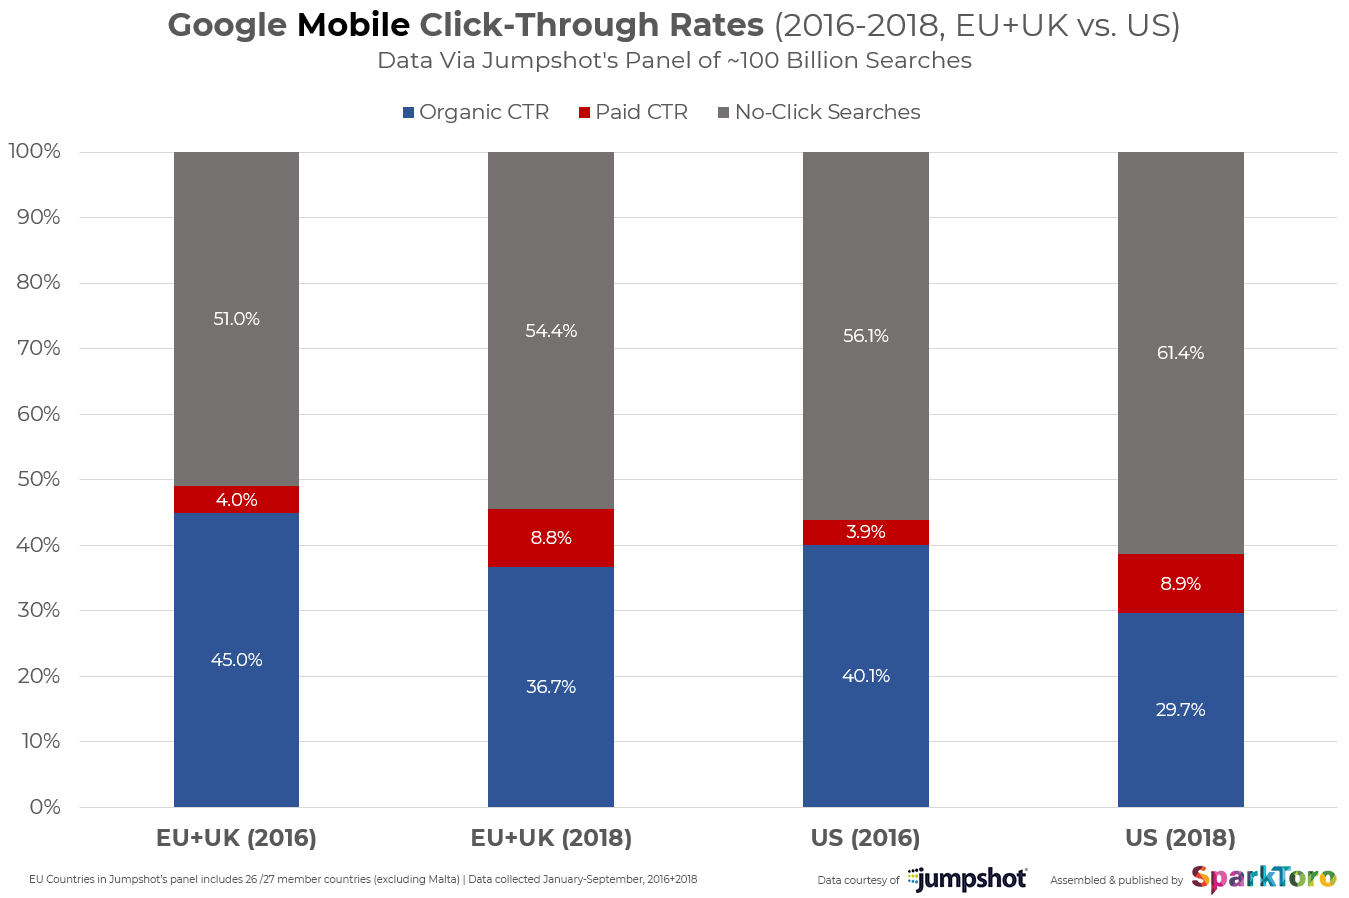 Google mobile click-through rates